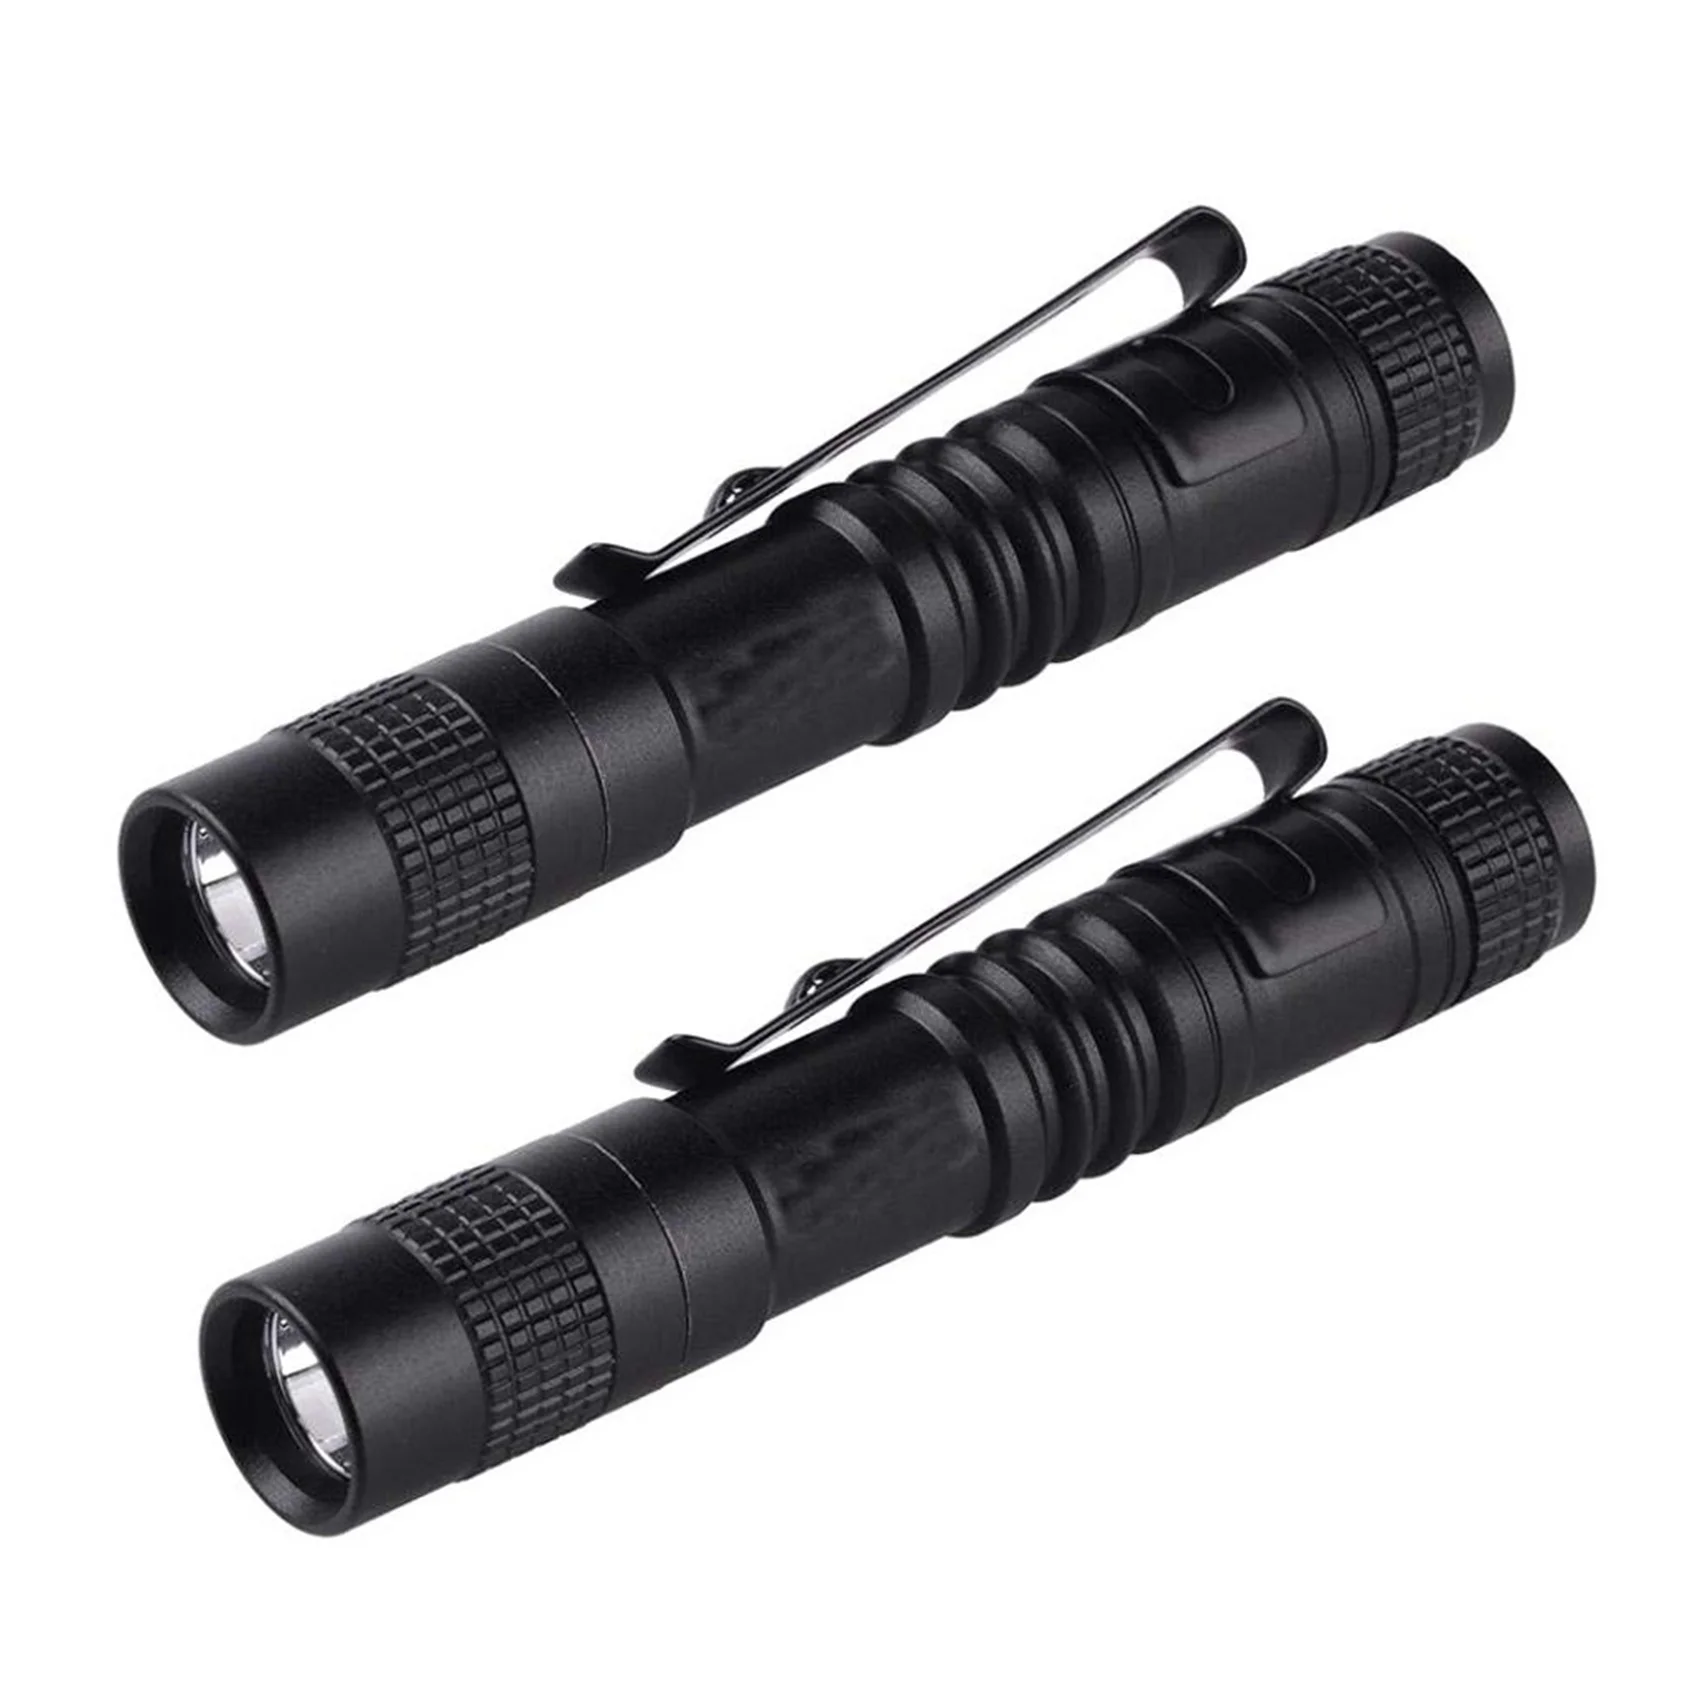 2X карманных фонарика-ручки Super Small Mini AAA XPE-R3 со светодиодной лампой, зажимом для ремня, карманным фонариком с кобурой